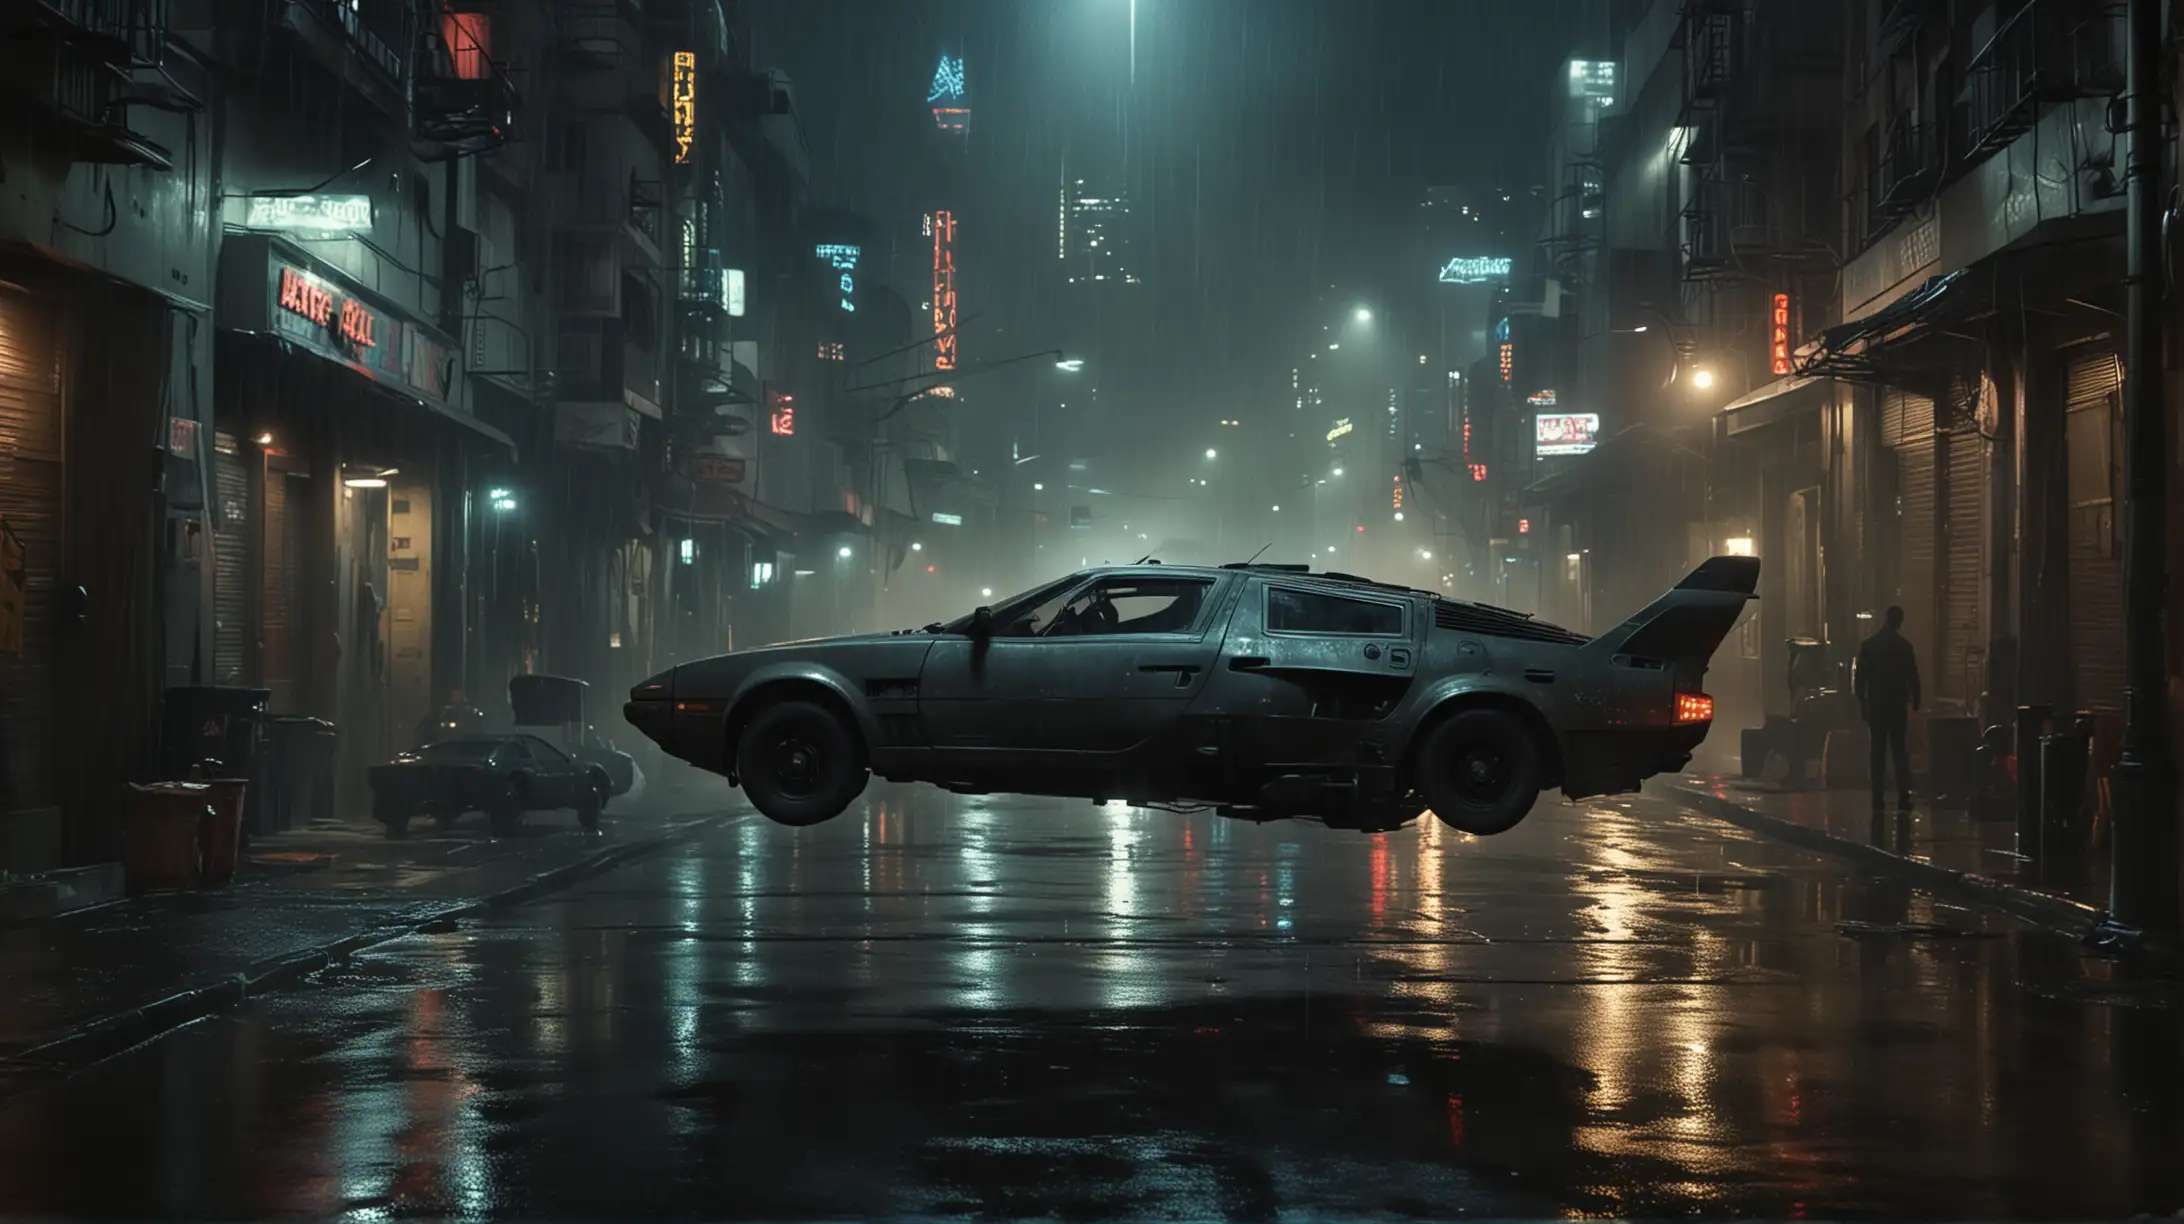 a flying car from blade runner film lands in the dark street of futuristic los angeles, dark, much steam, heavy rain